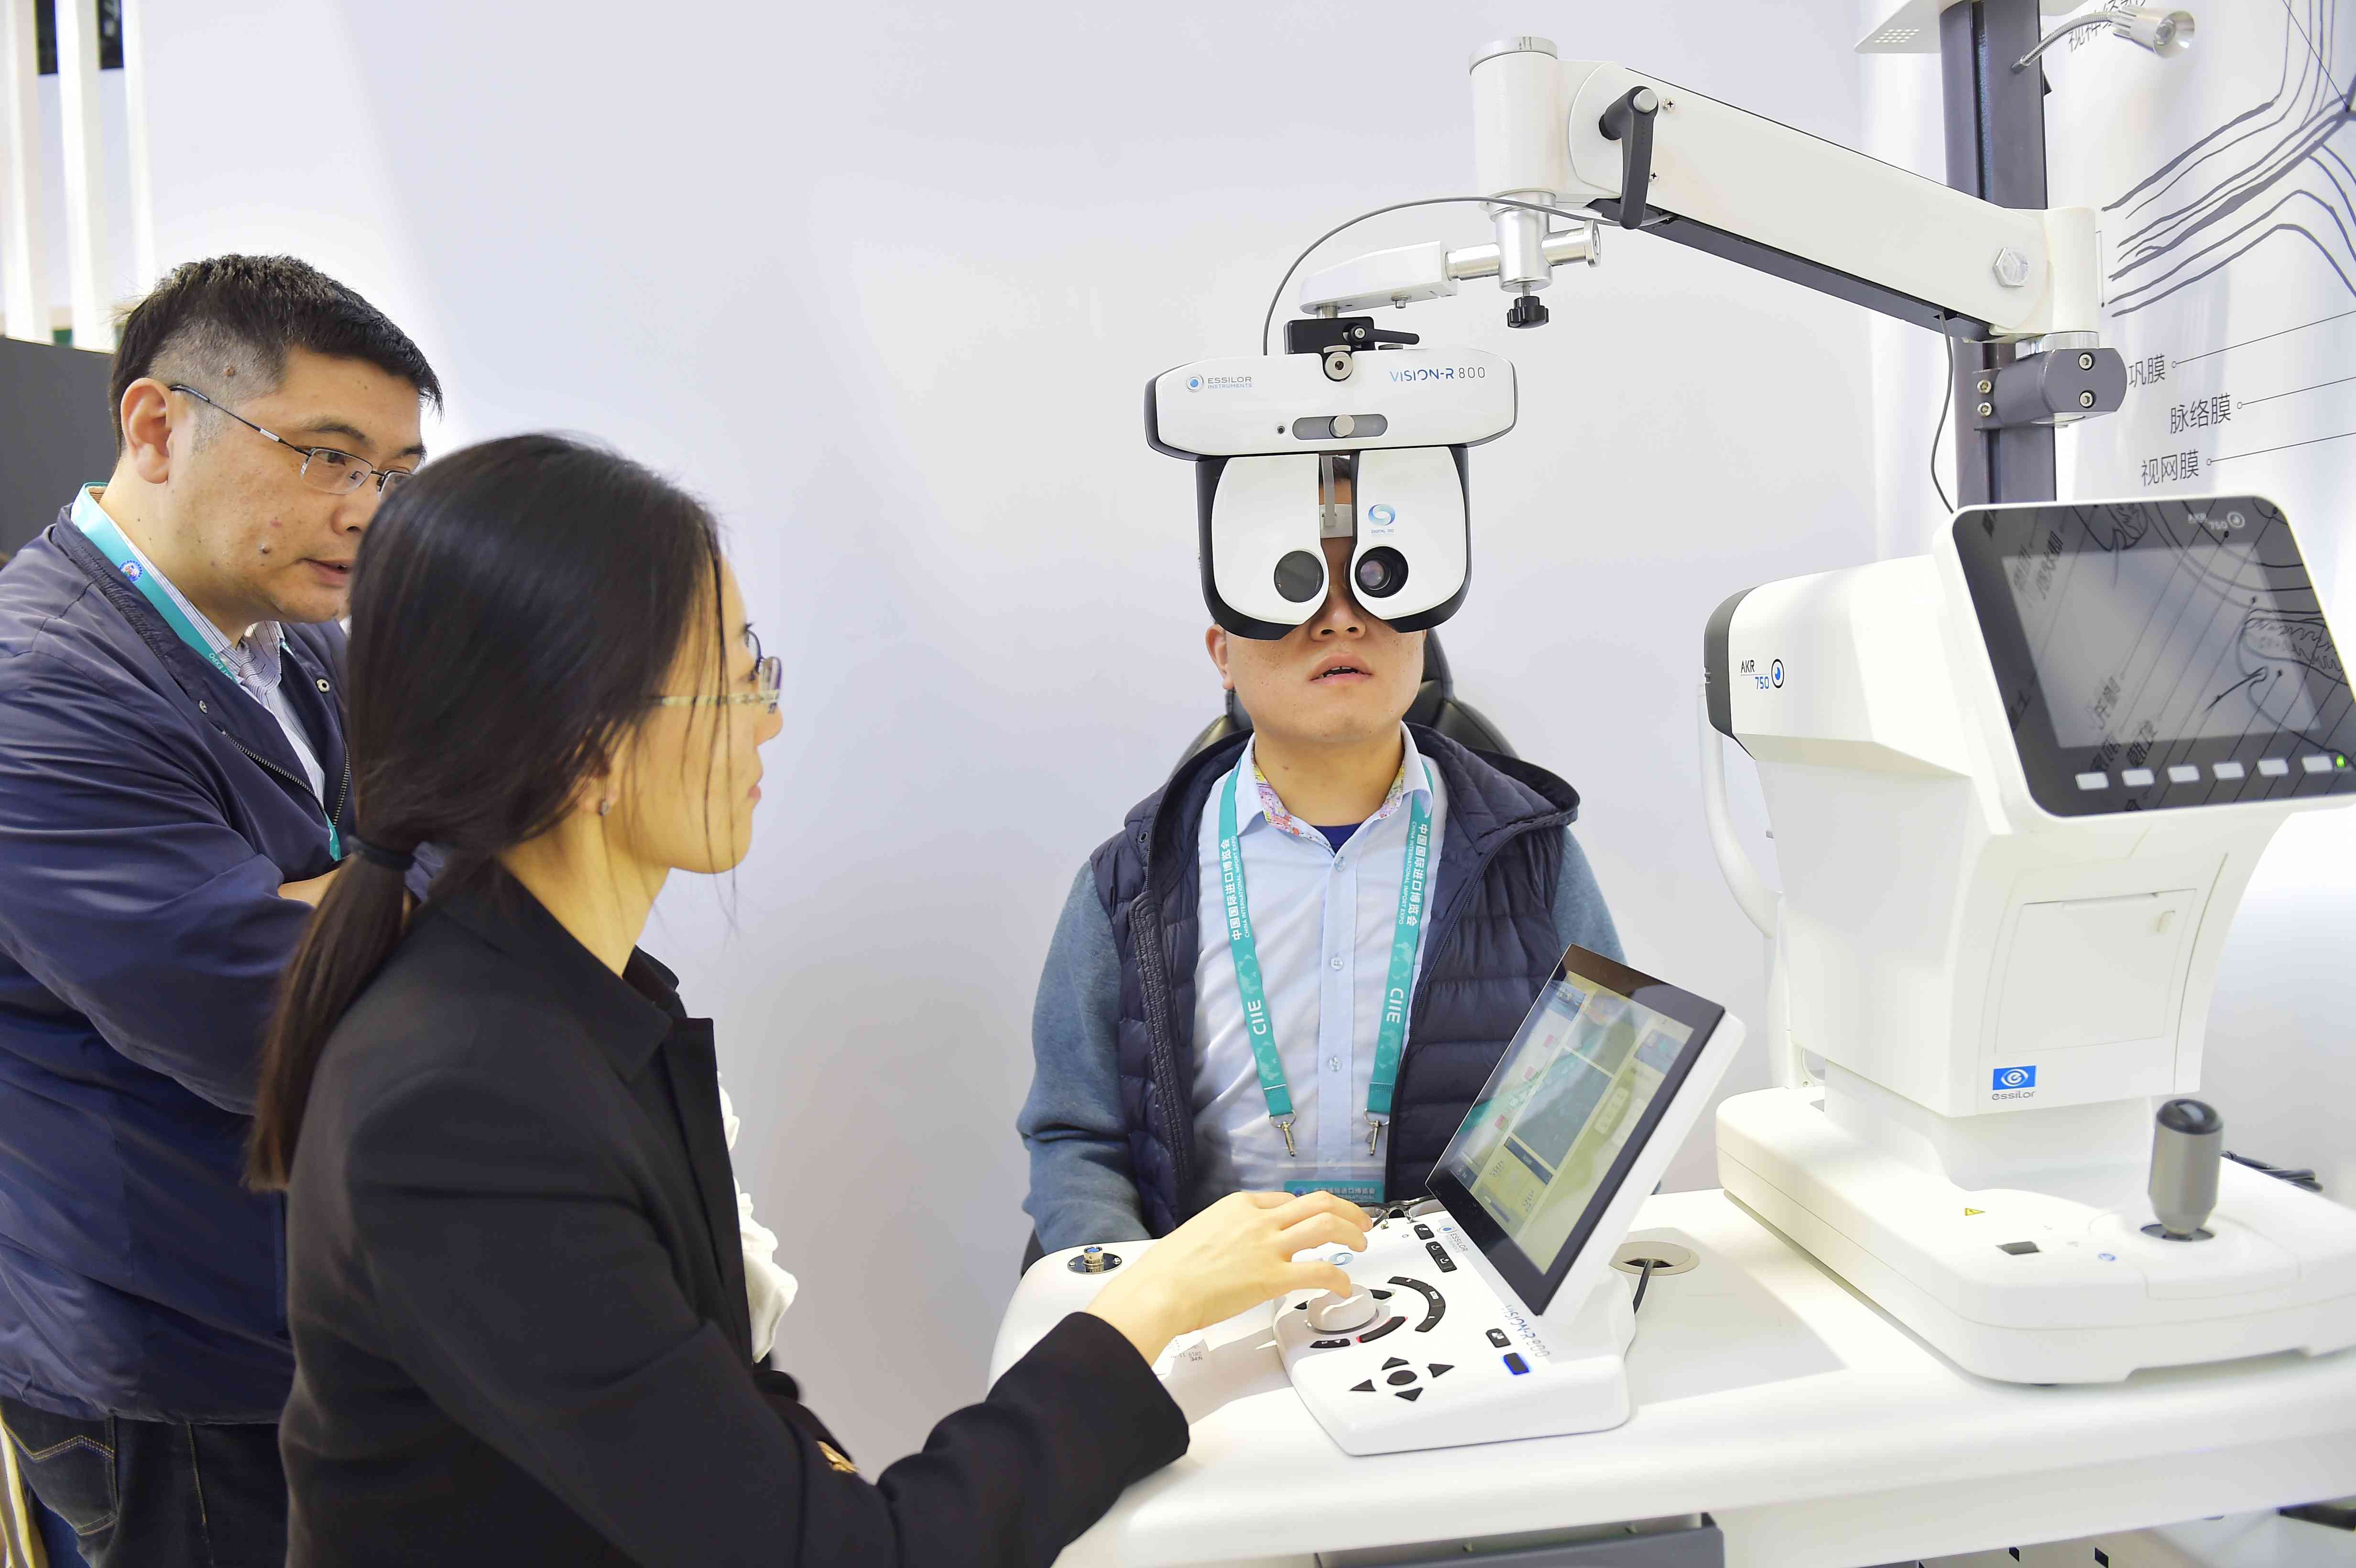 ZKS_1833  2018年11月6日，首届中国国际进口博览会上，视力检测仪器以度计算进行验光。当代贵州融媒体记者 张凯 摄.JPG